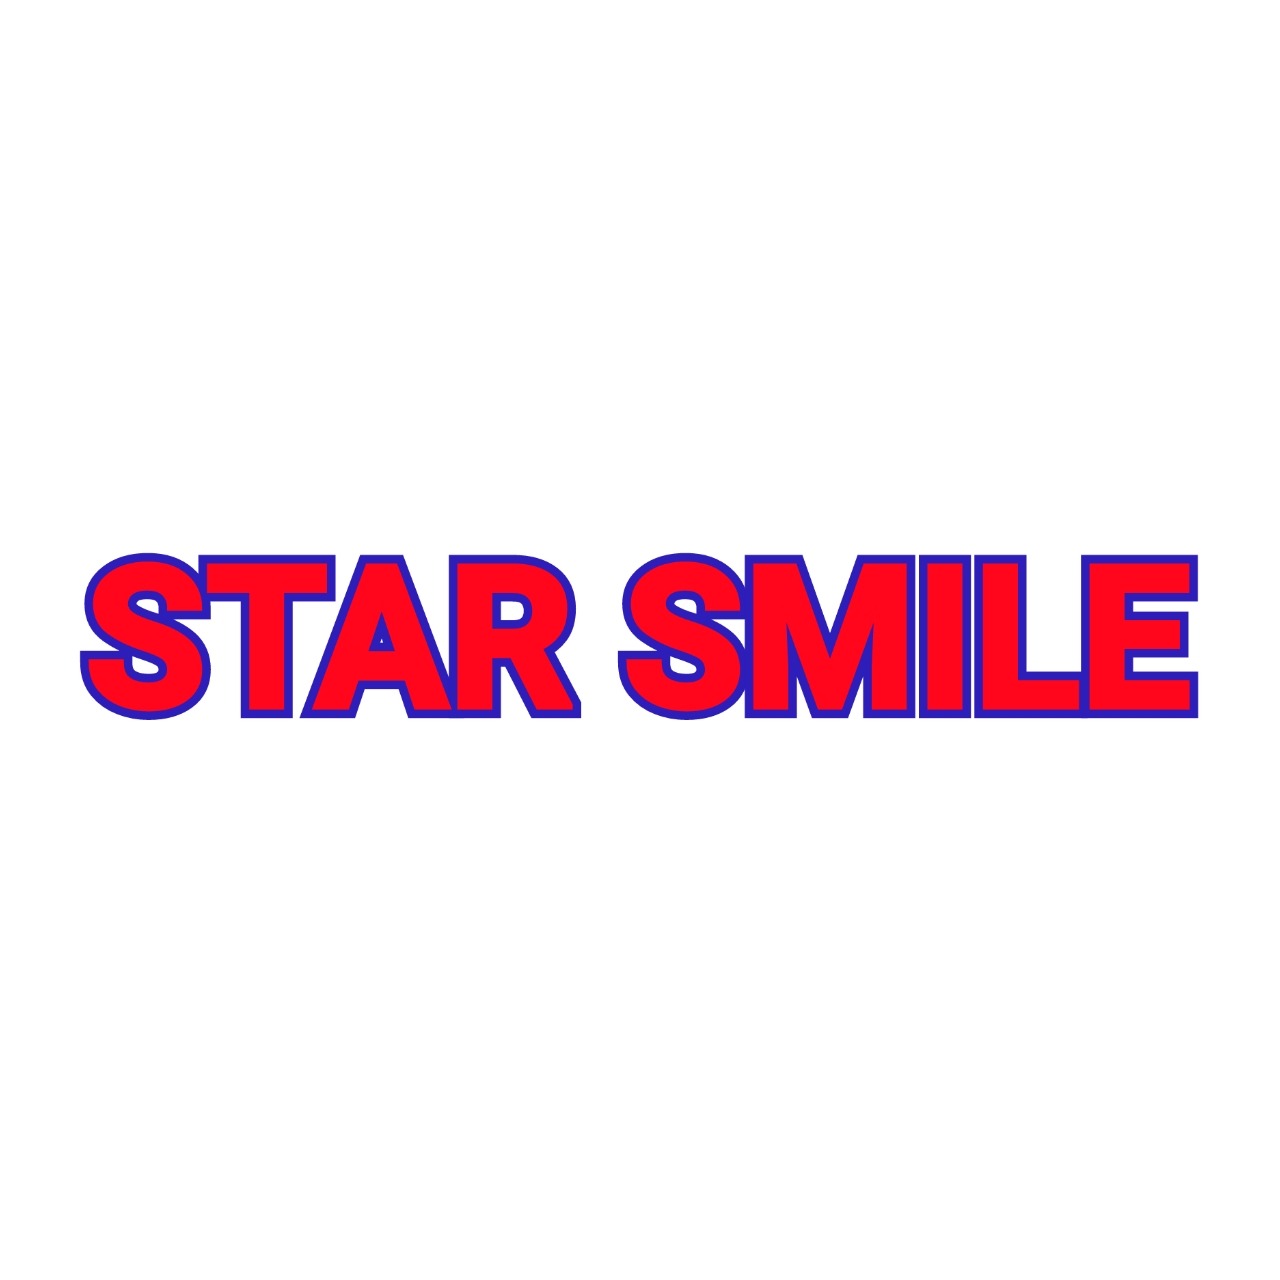 STAR SMILE